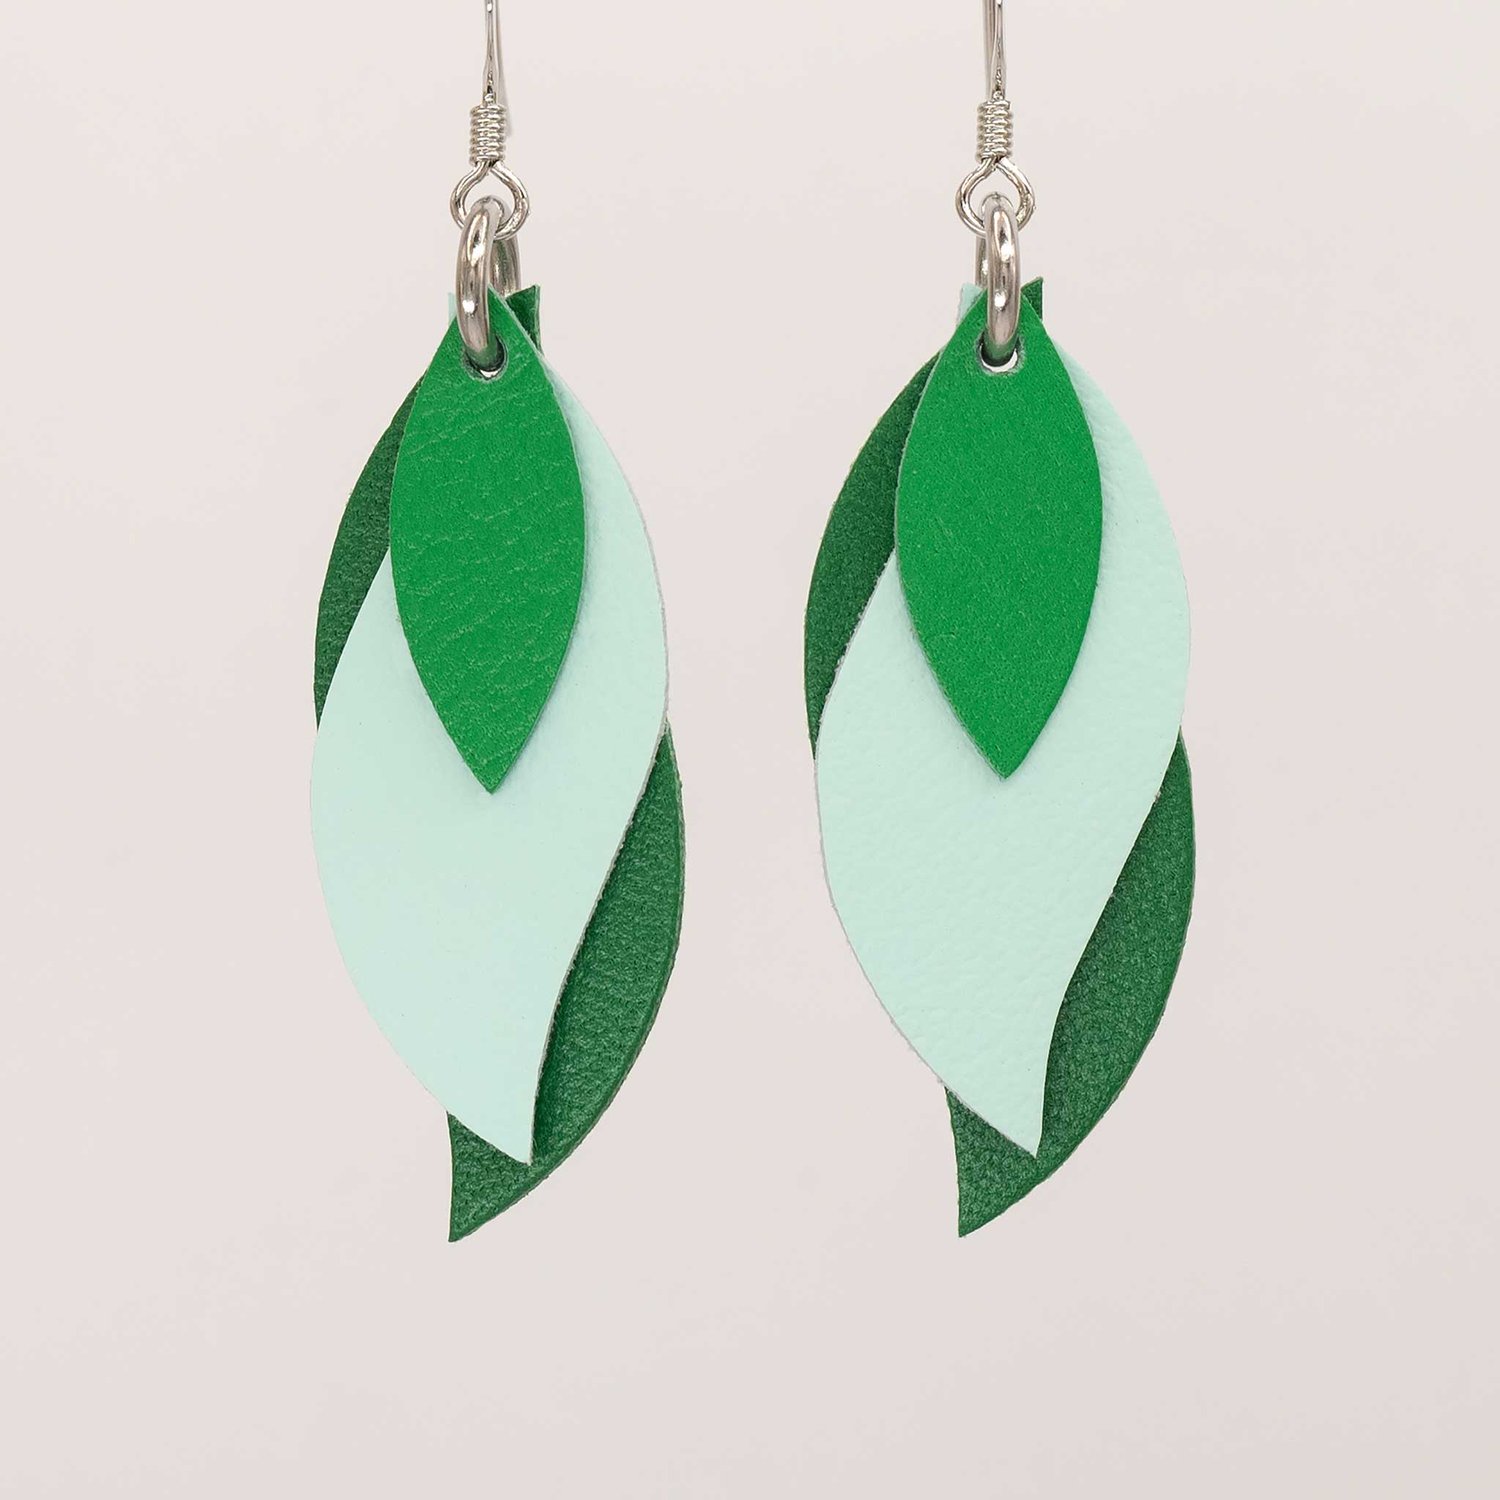 Image of Handmade Australian leather leaf earrings - Green and mint [LGM-732]